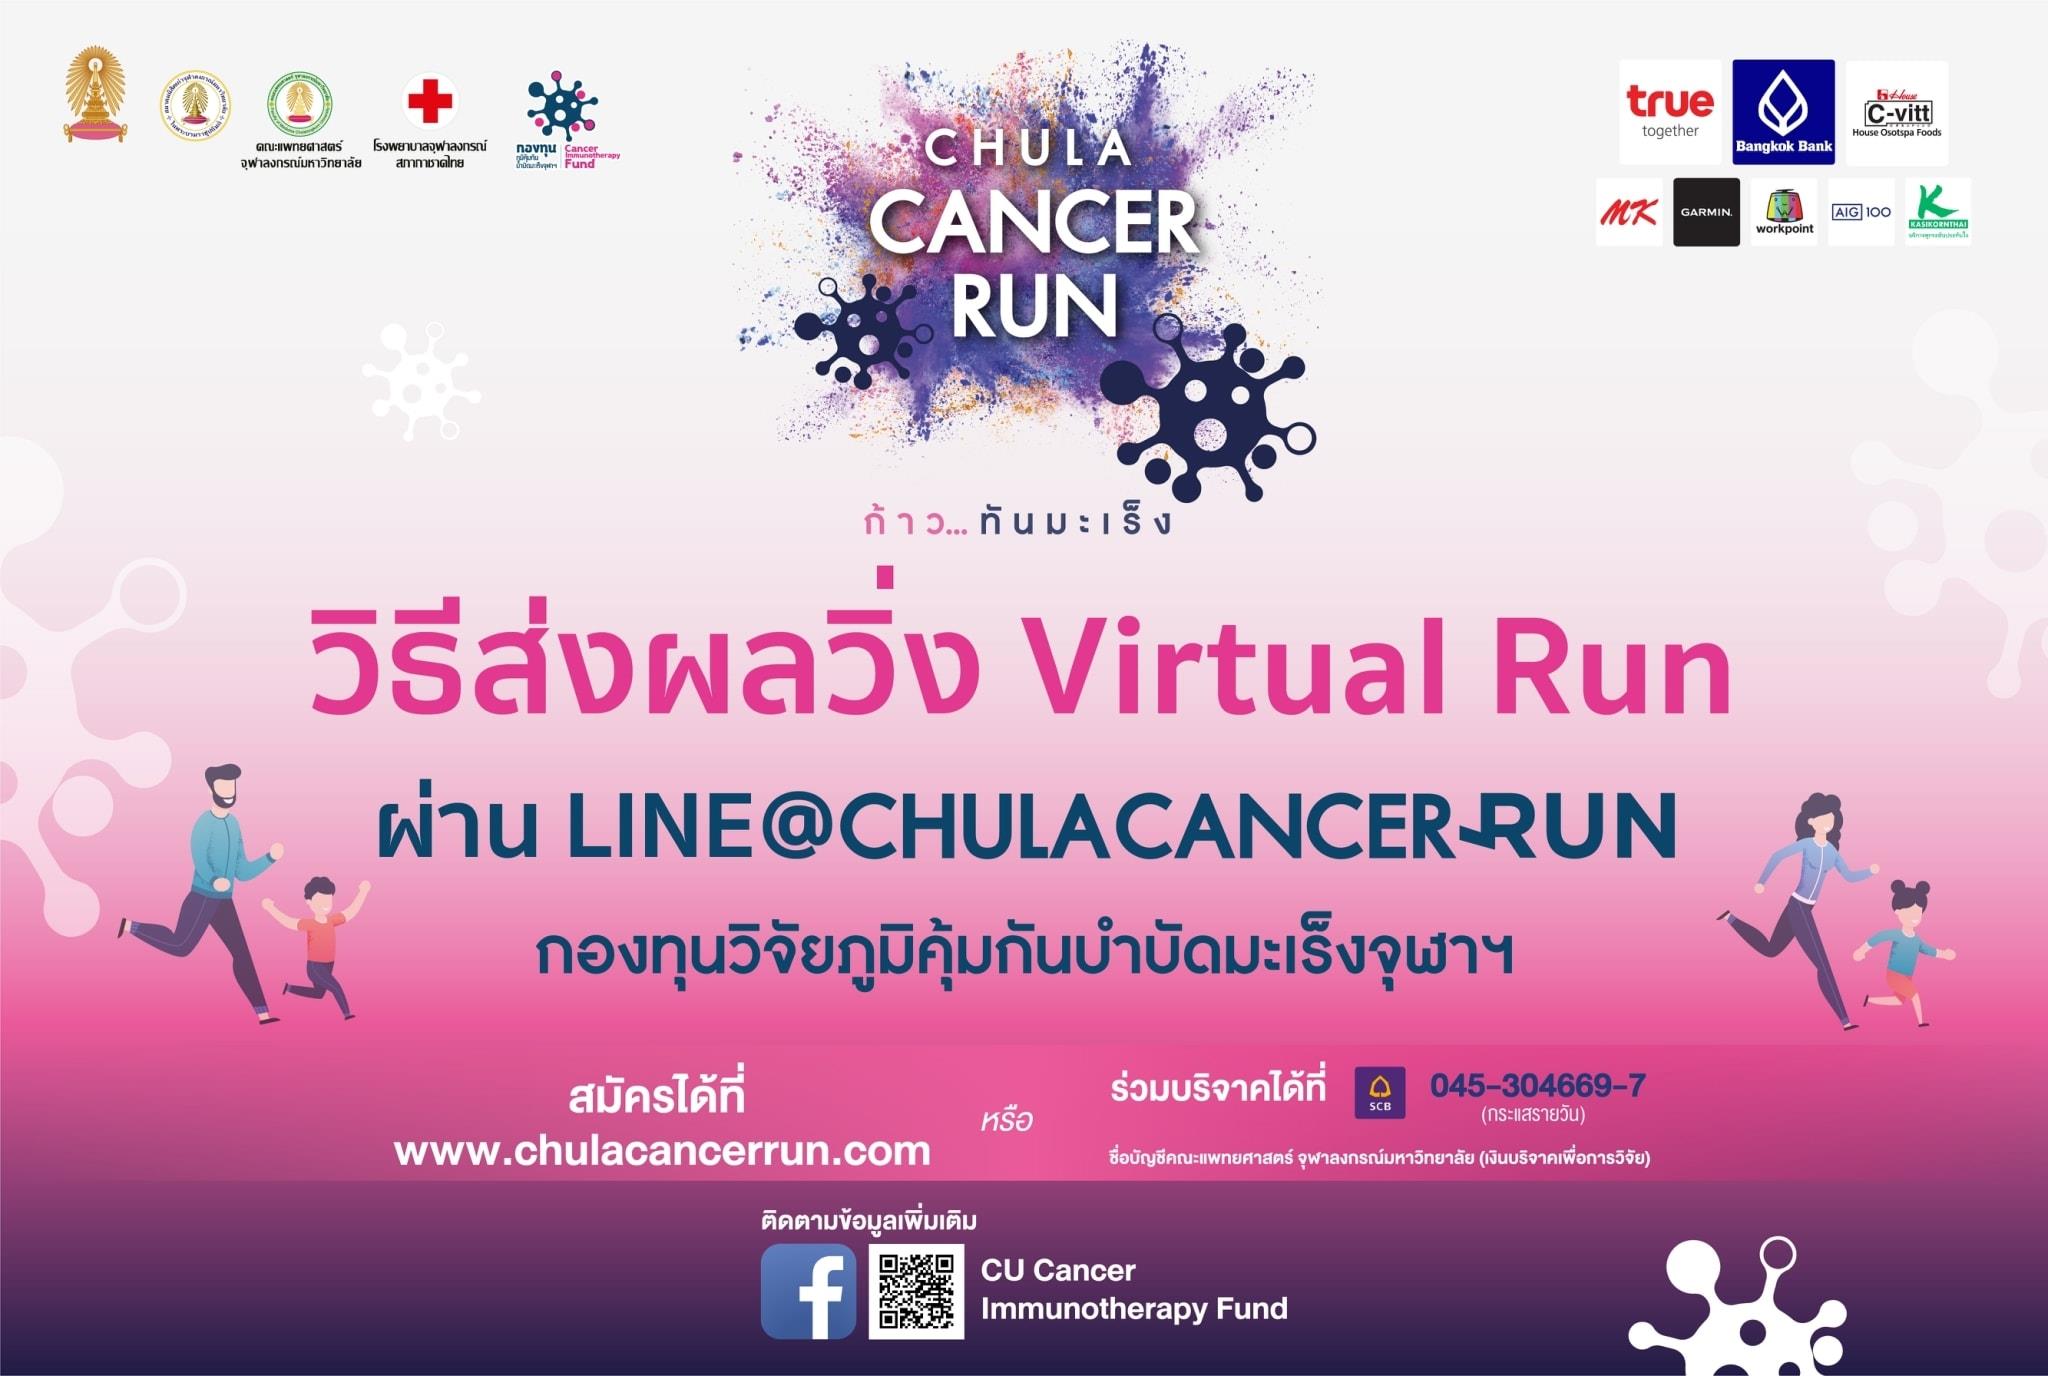 Chula Cancer Virtual Run